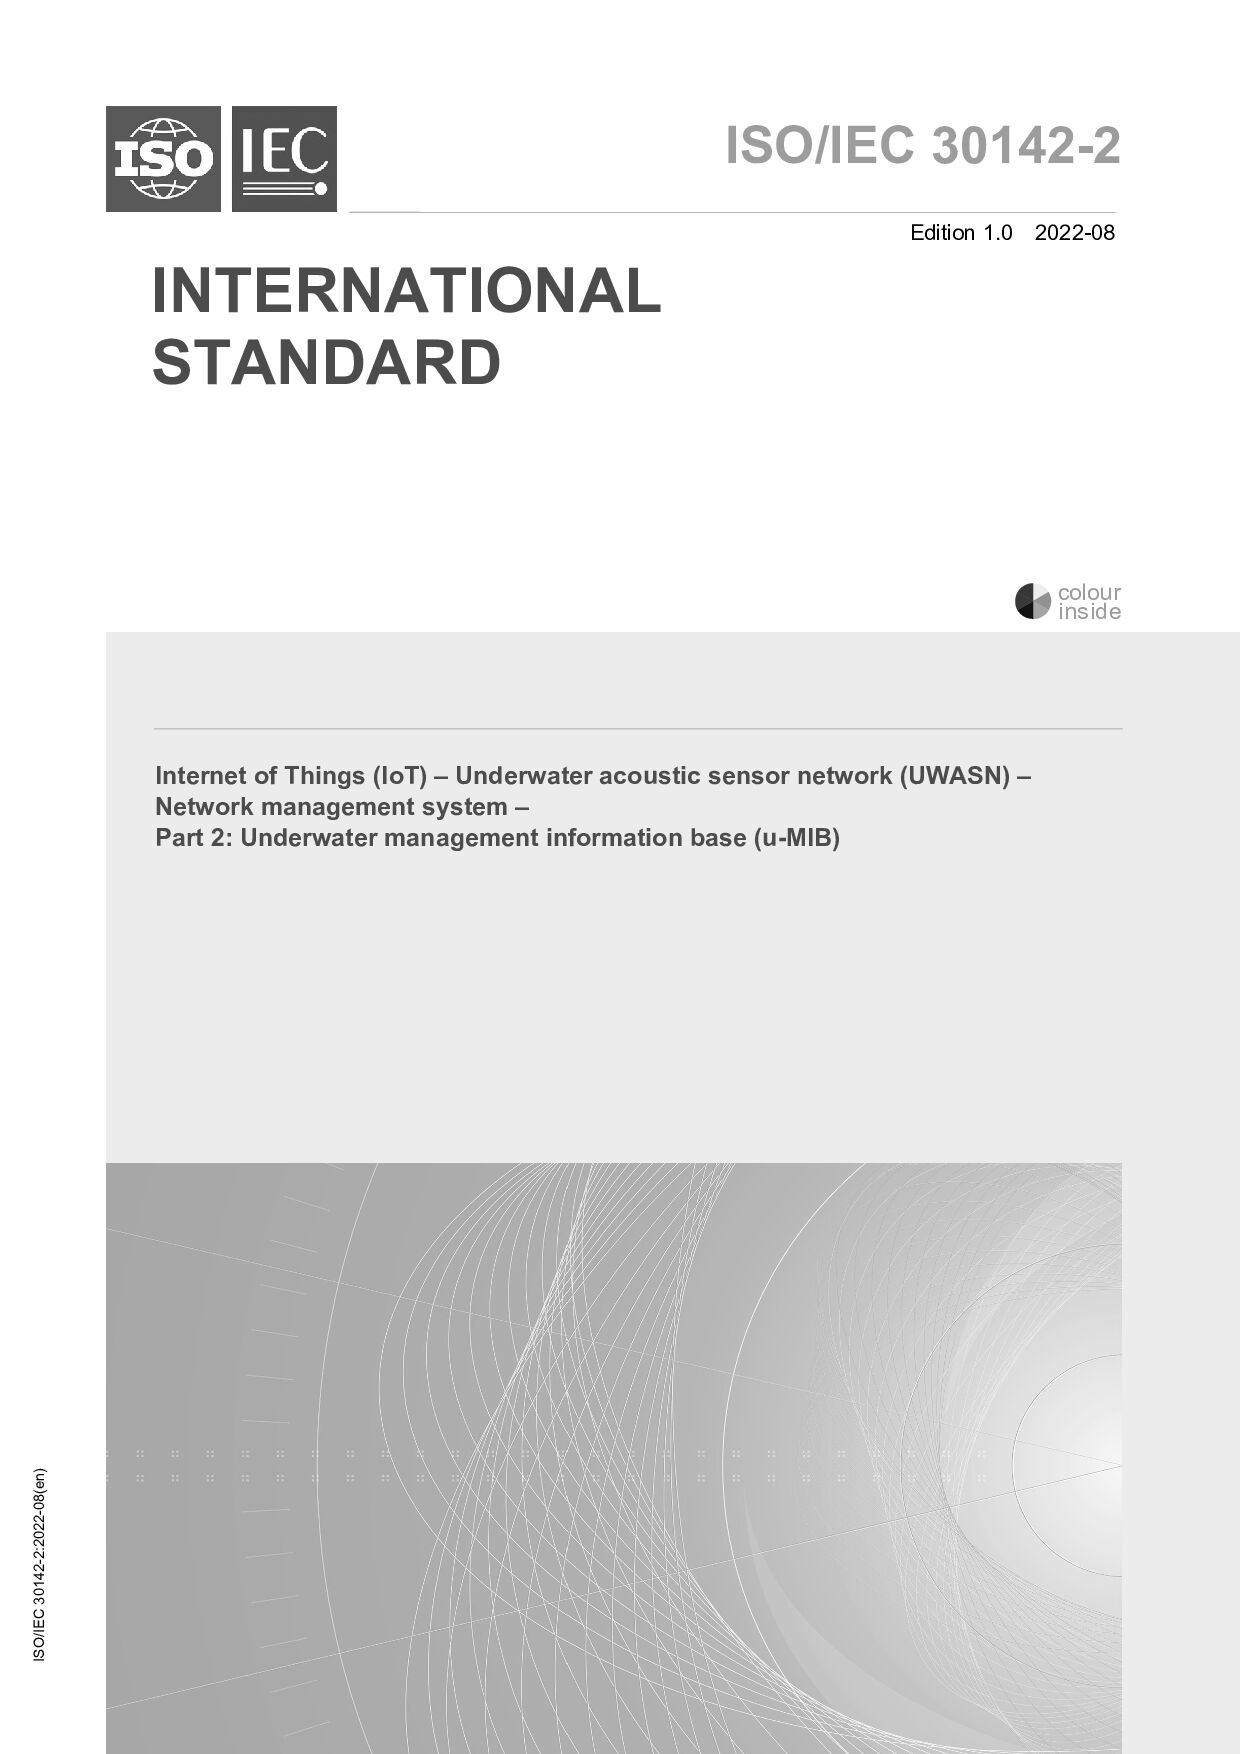 ISO/IEC 30142-2:2022